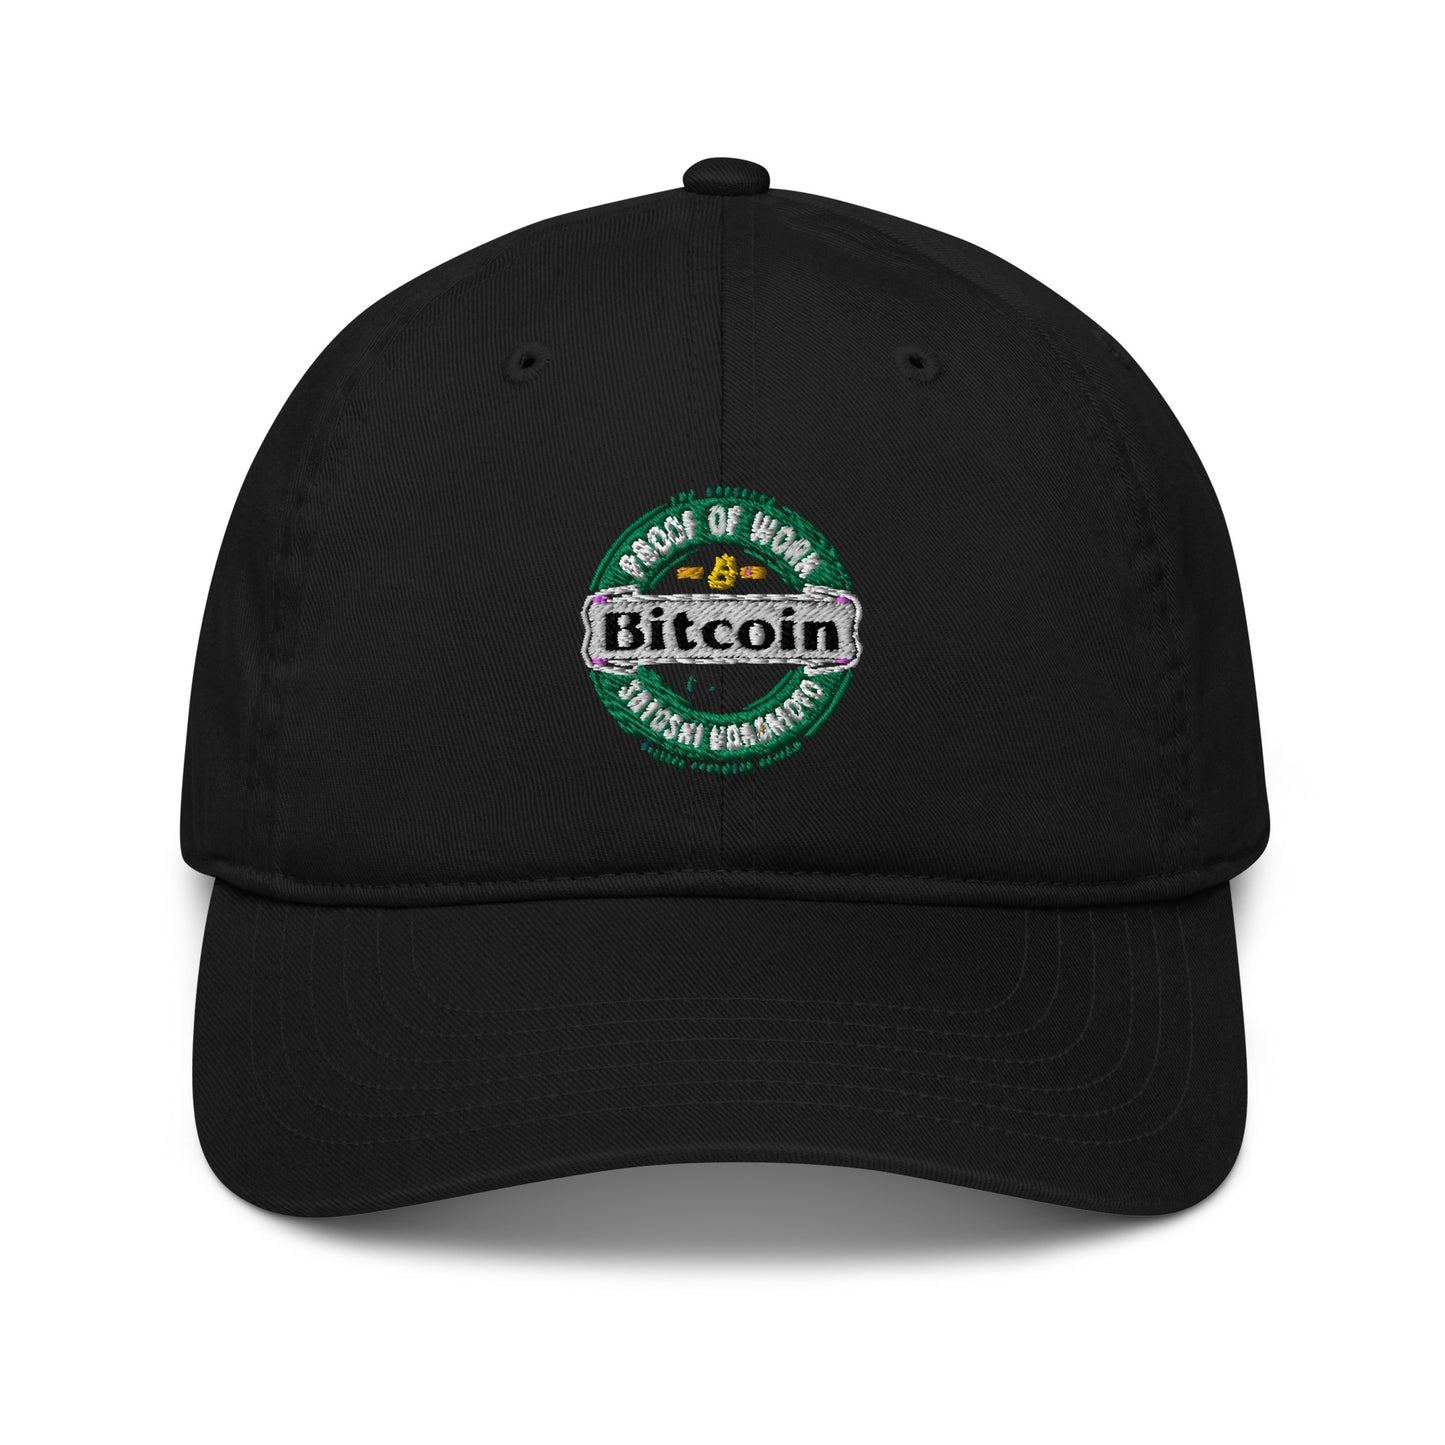 BTC Emblem Organic cotton hat